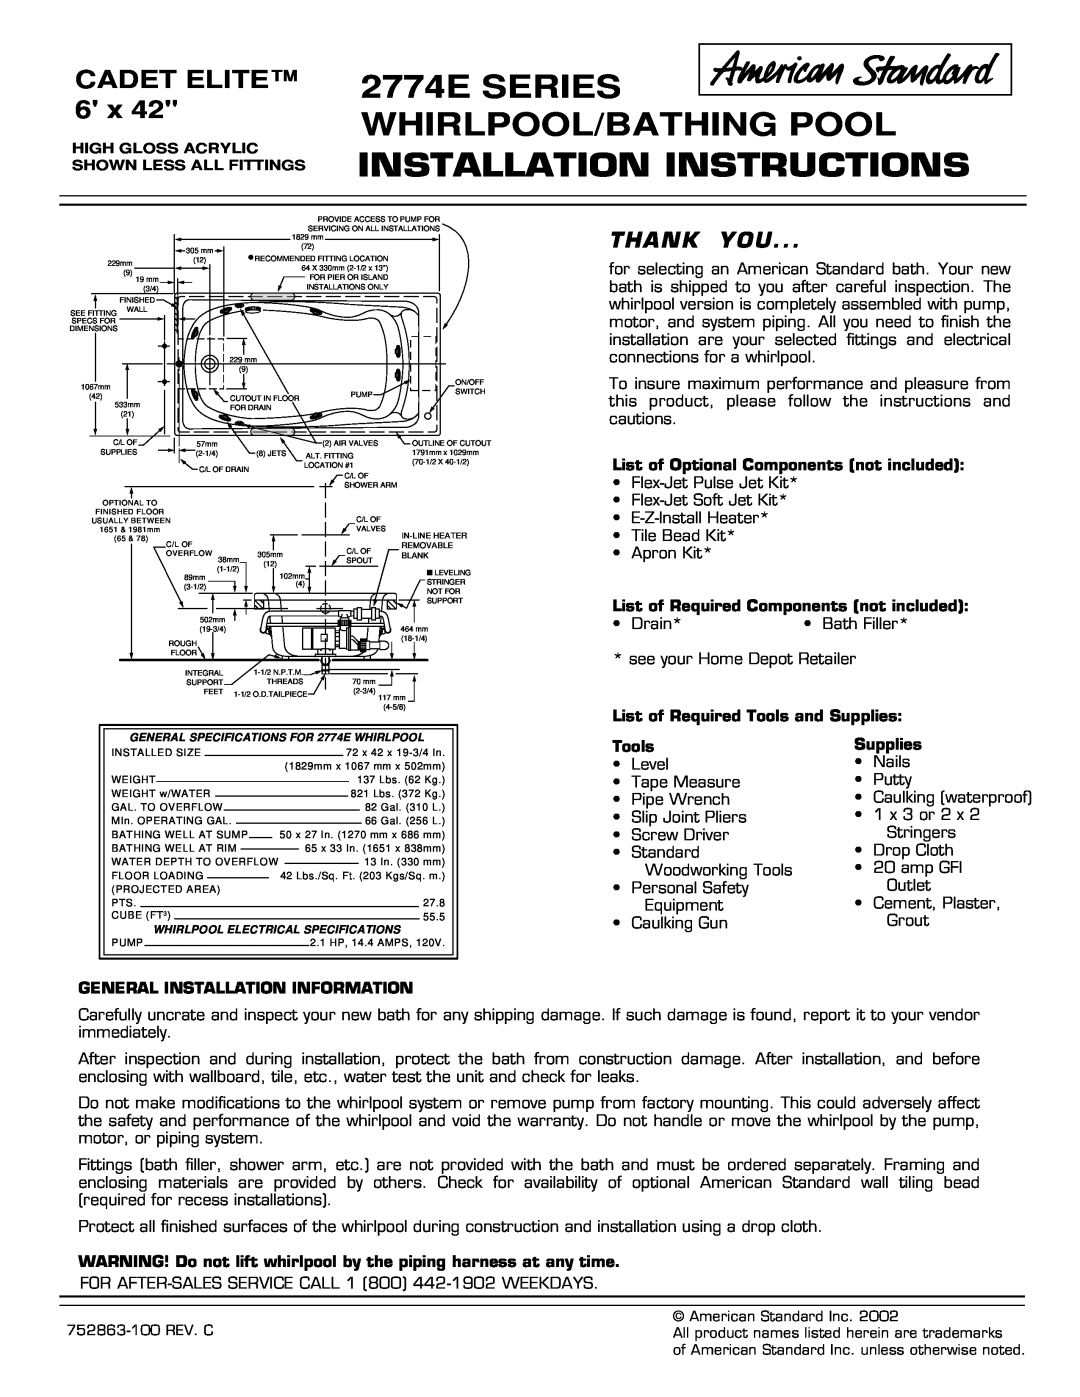 American Standard installation instructions 2774E SERIES WHIRLPOOL/BATHING POOL, Installation Instructions, Cadet Elite 